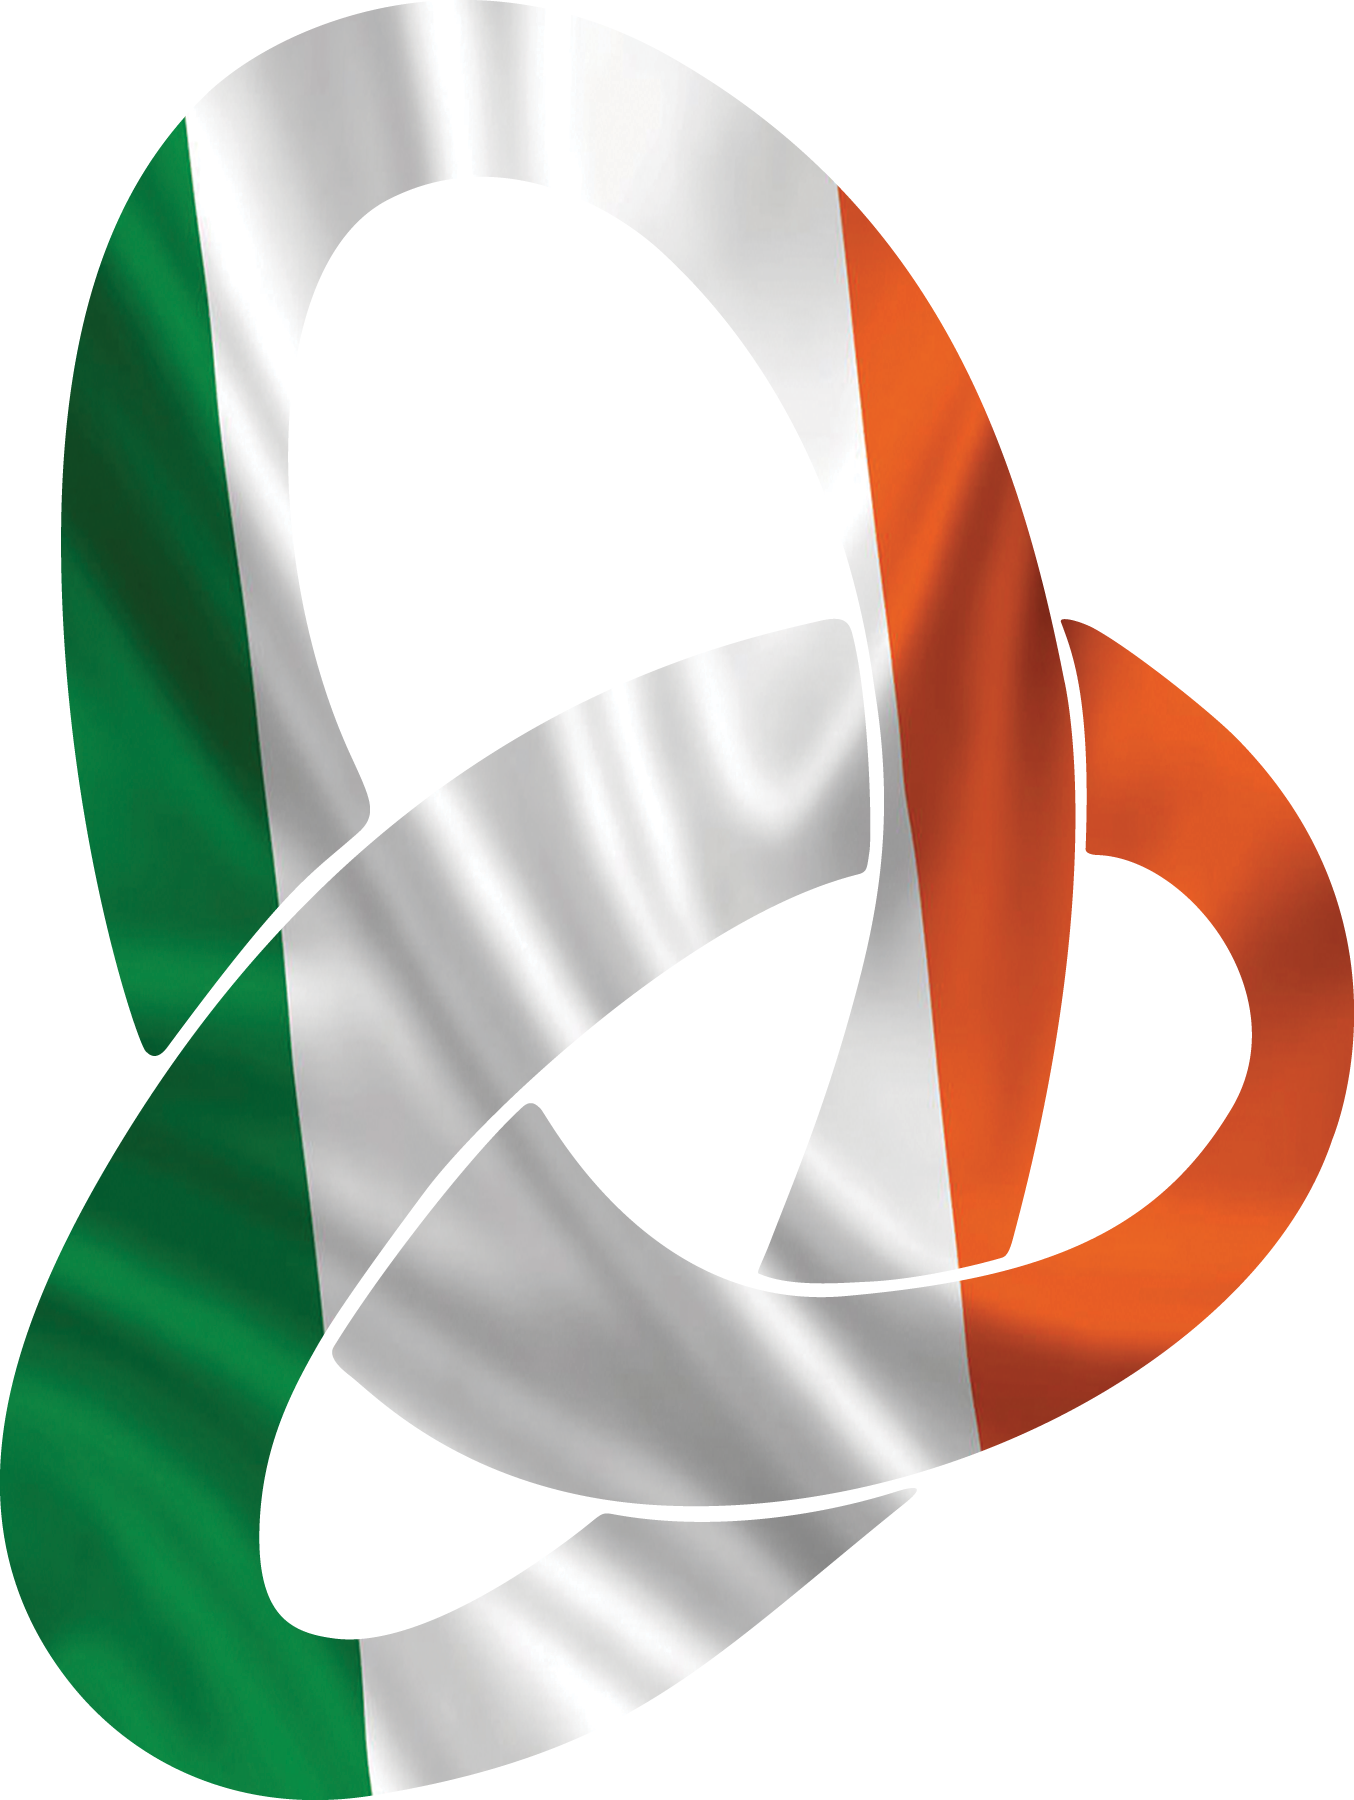 Ciy Move Ireland (1354x1800)